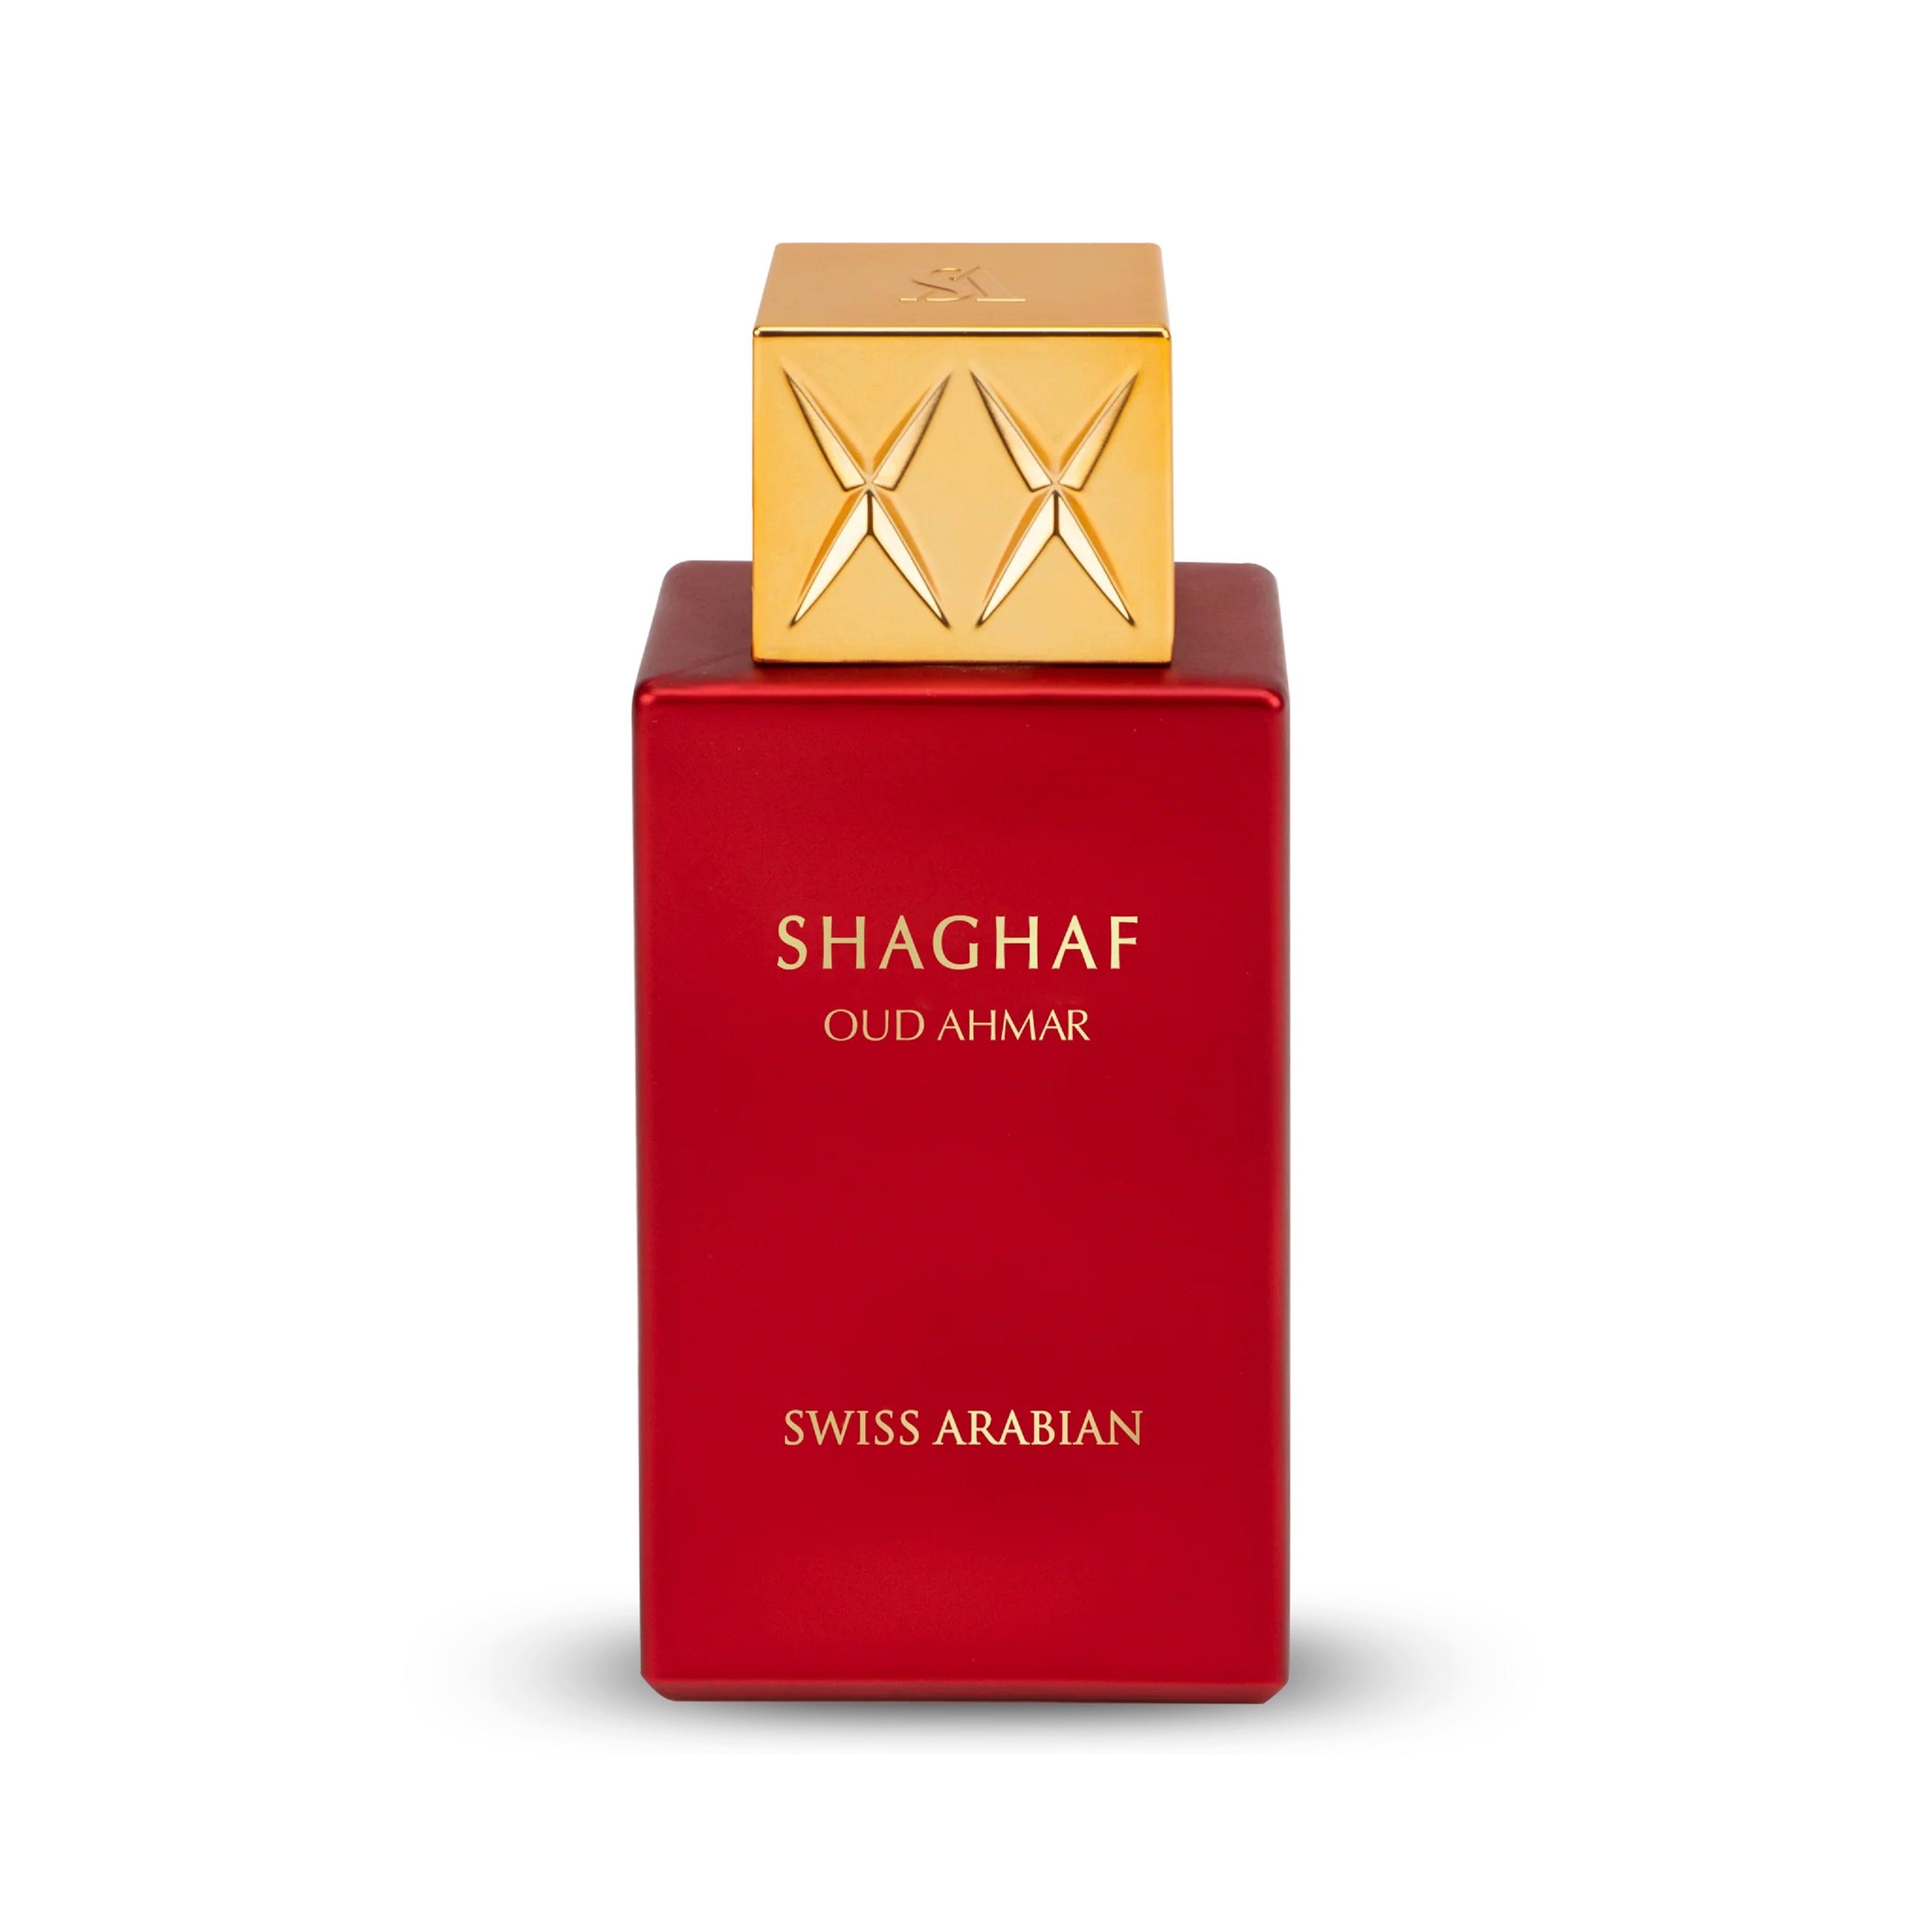 Swiss Arabian Eau de Parfum Shaghaf Oud AHMAR 75ml - Refill unverpackt